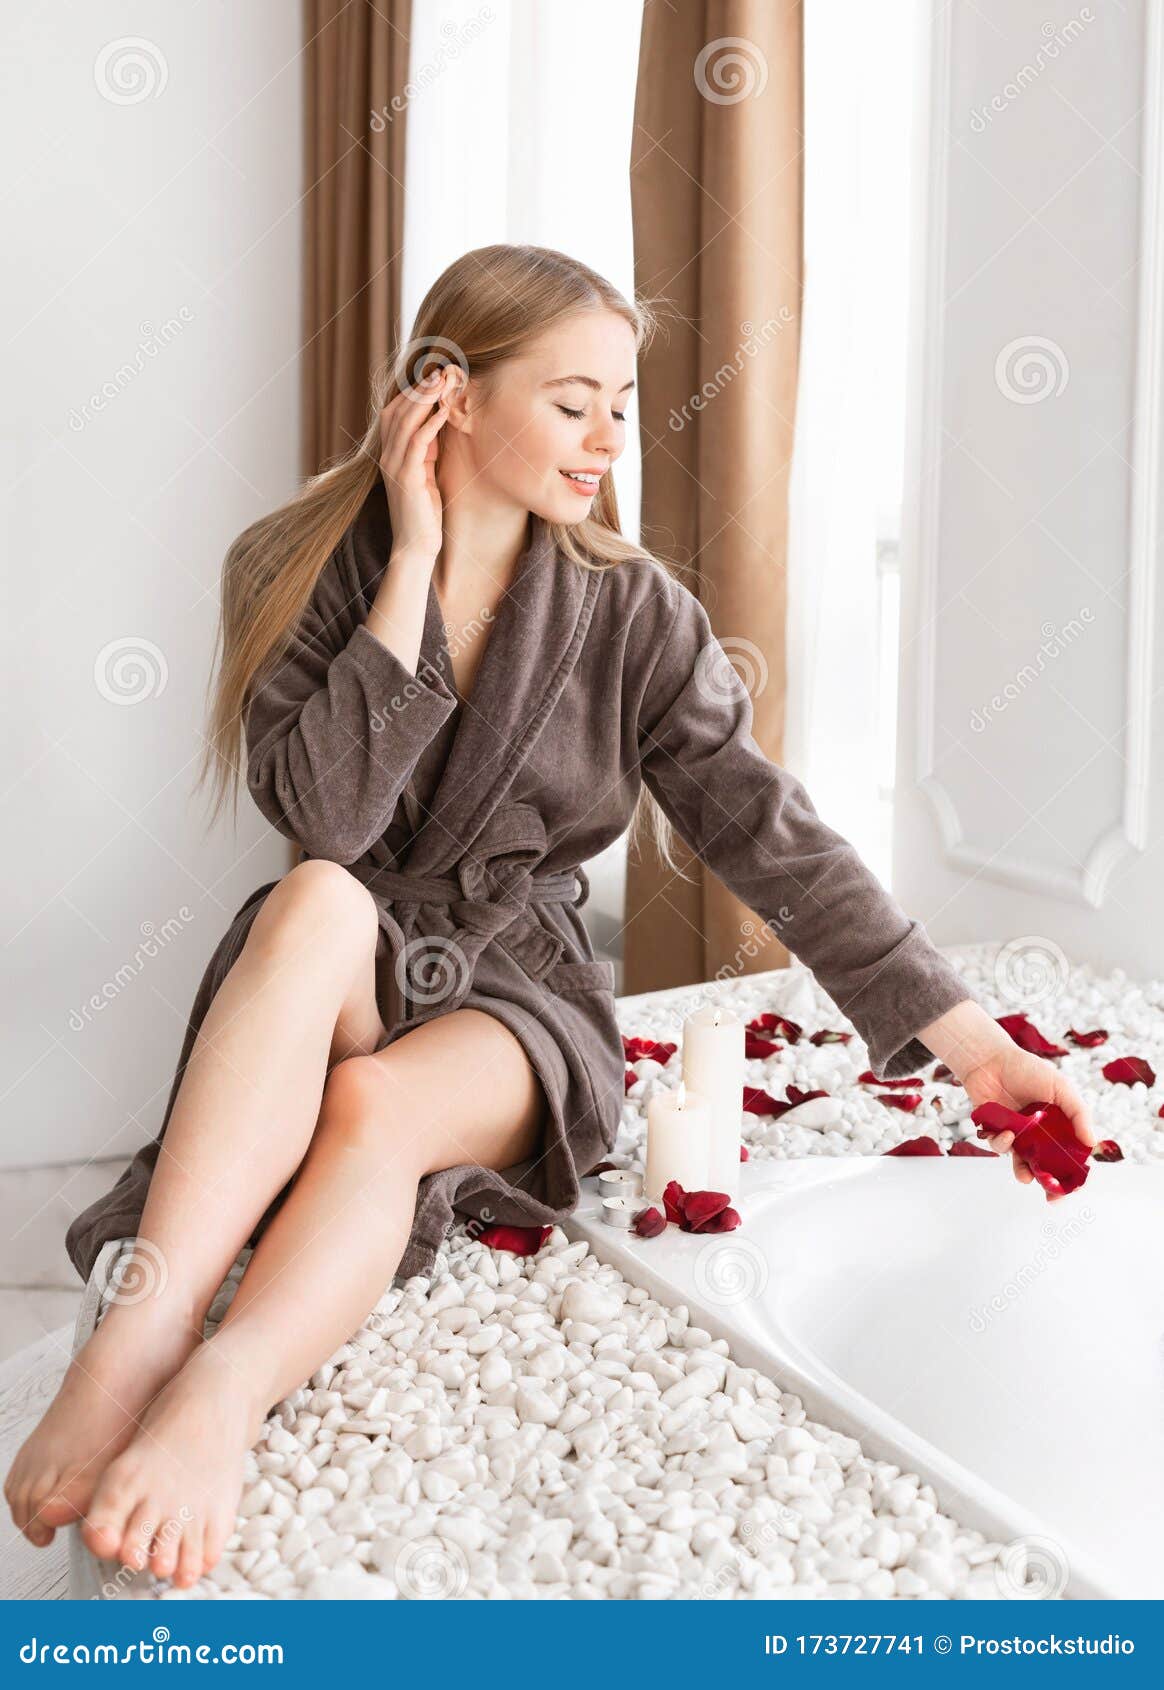 Delightful Blonde Girl Getting Ready To Take Foam Bath Stock Image